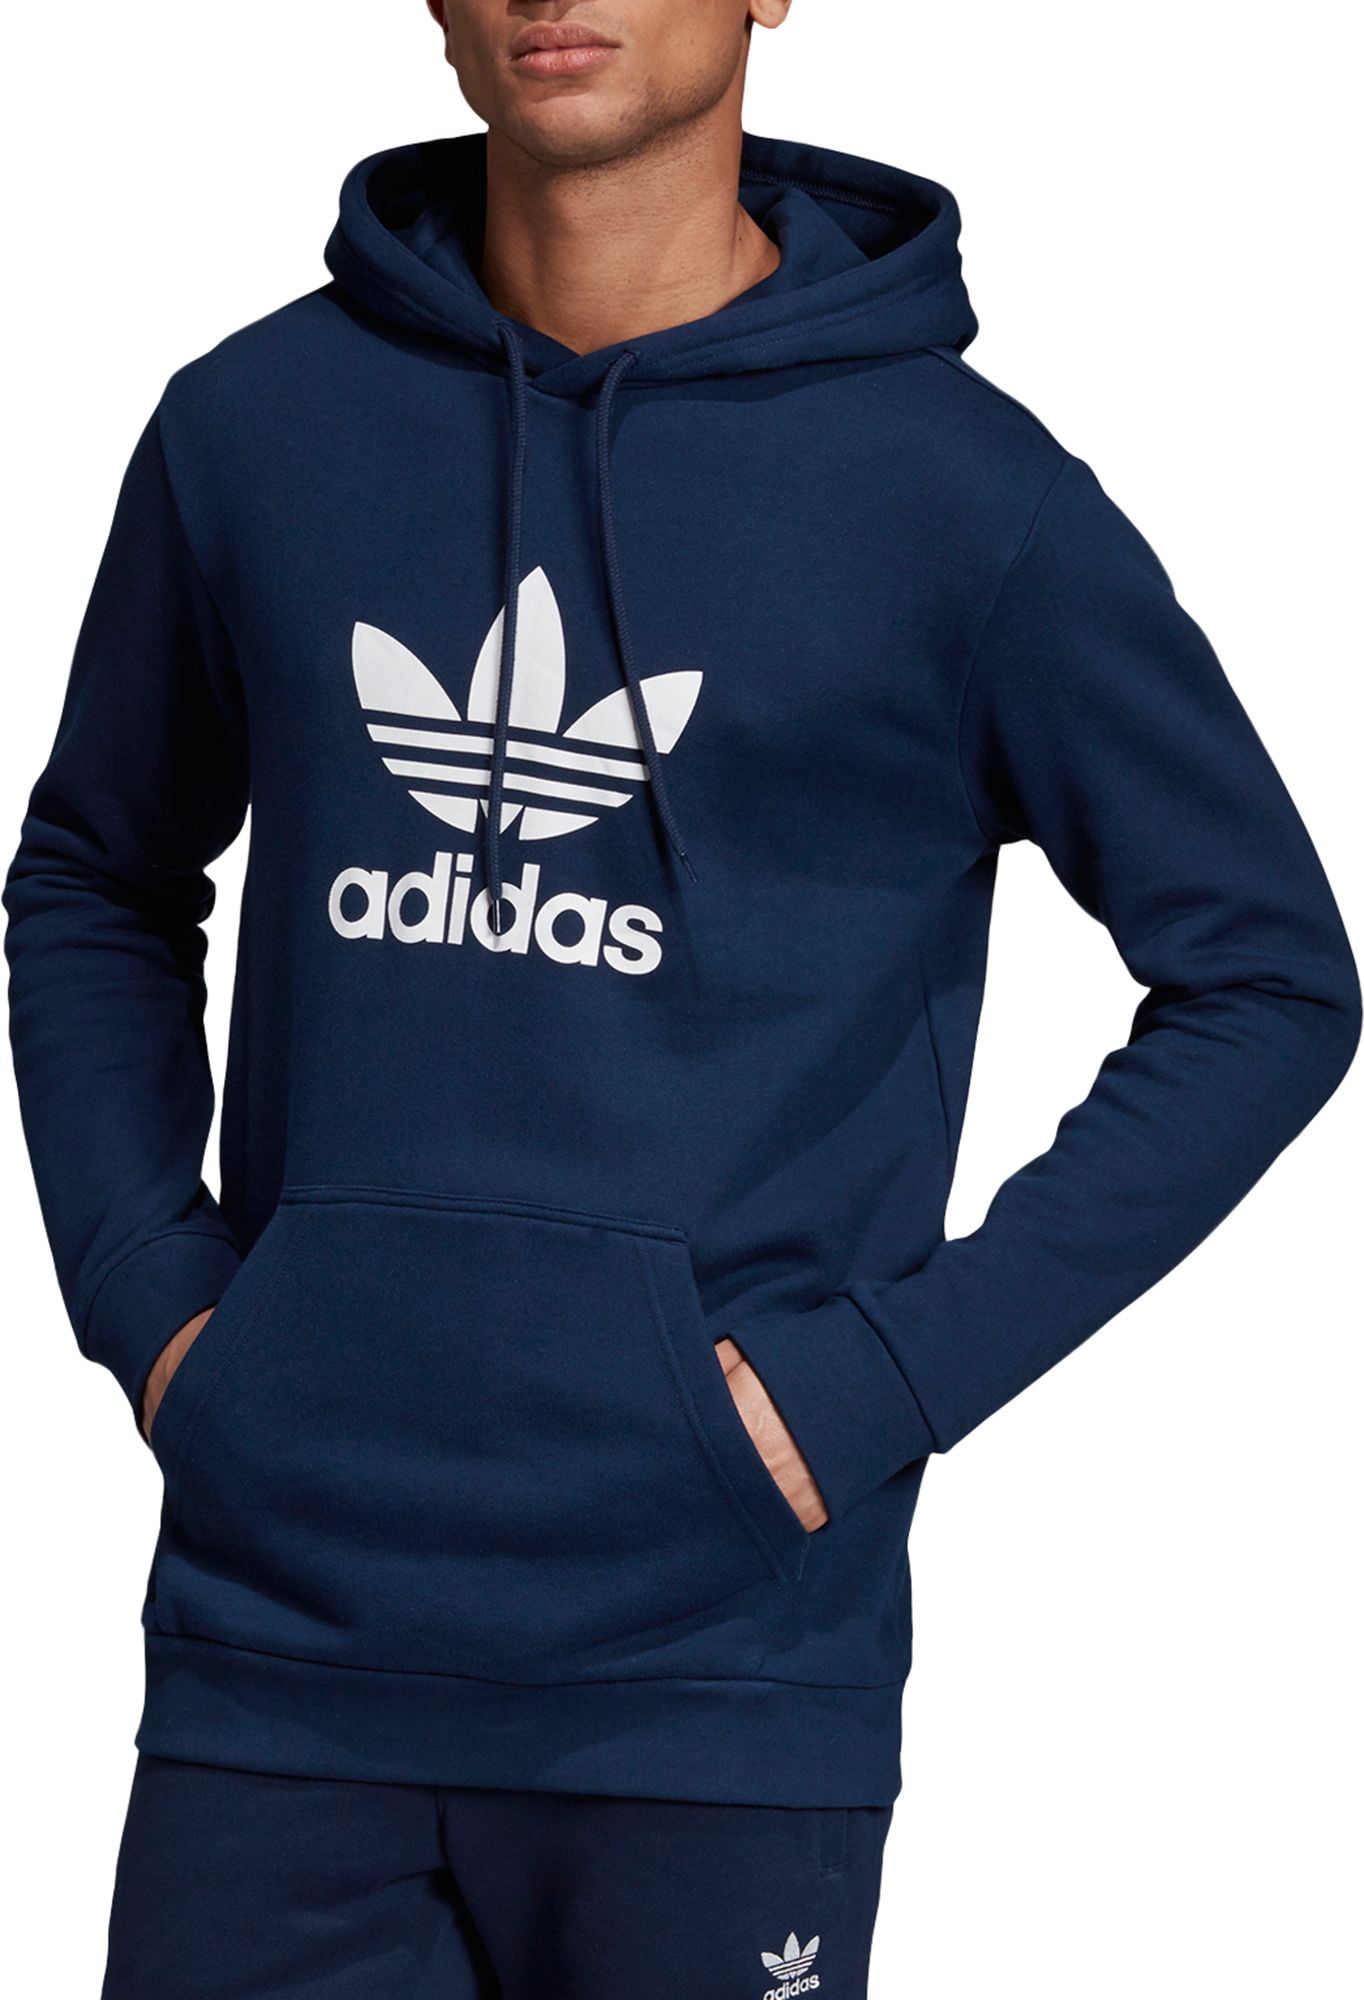 Adidas - adidas Originals Men's Trefoil Warm-Up Hoodie - Walmart.com ...